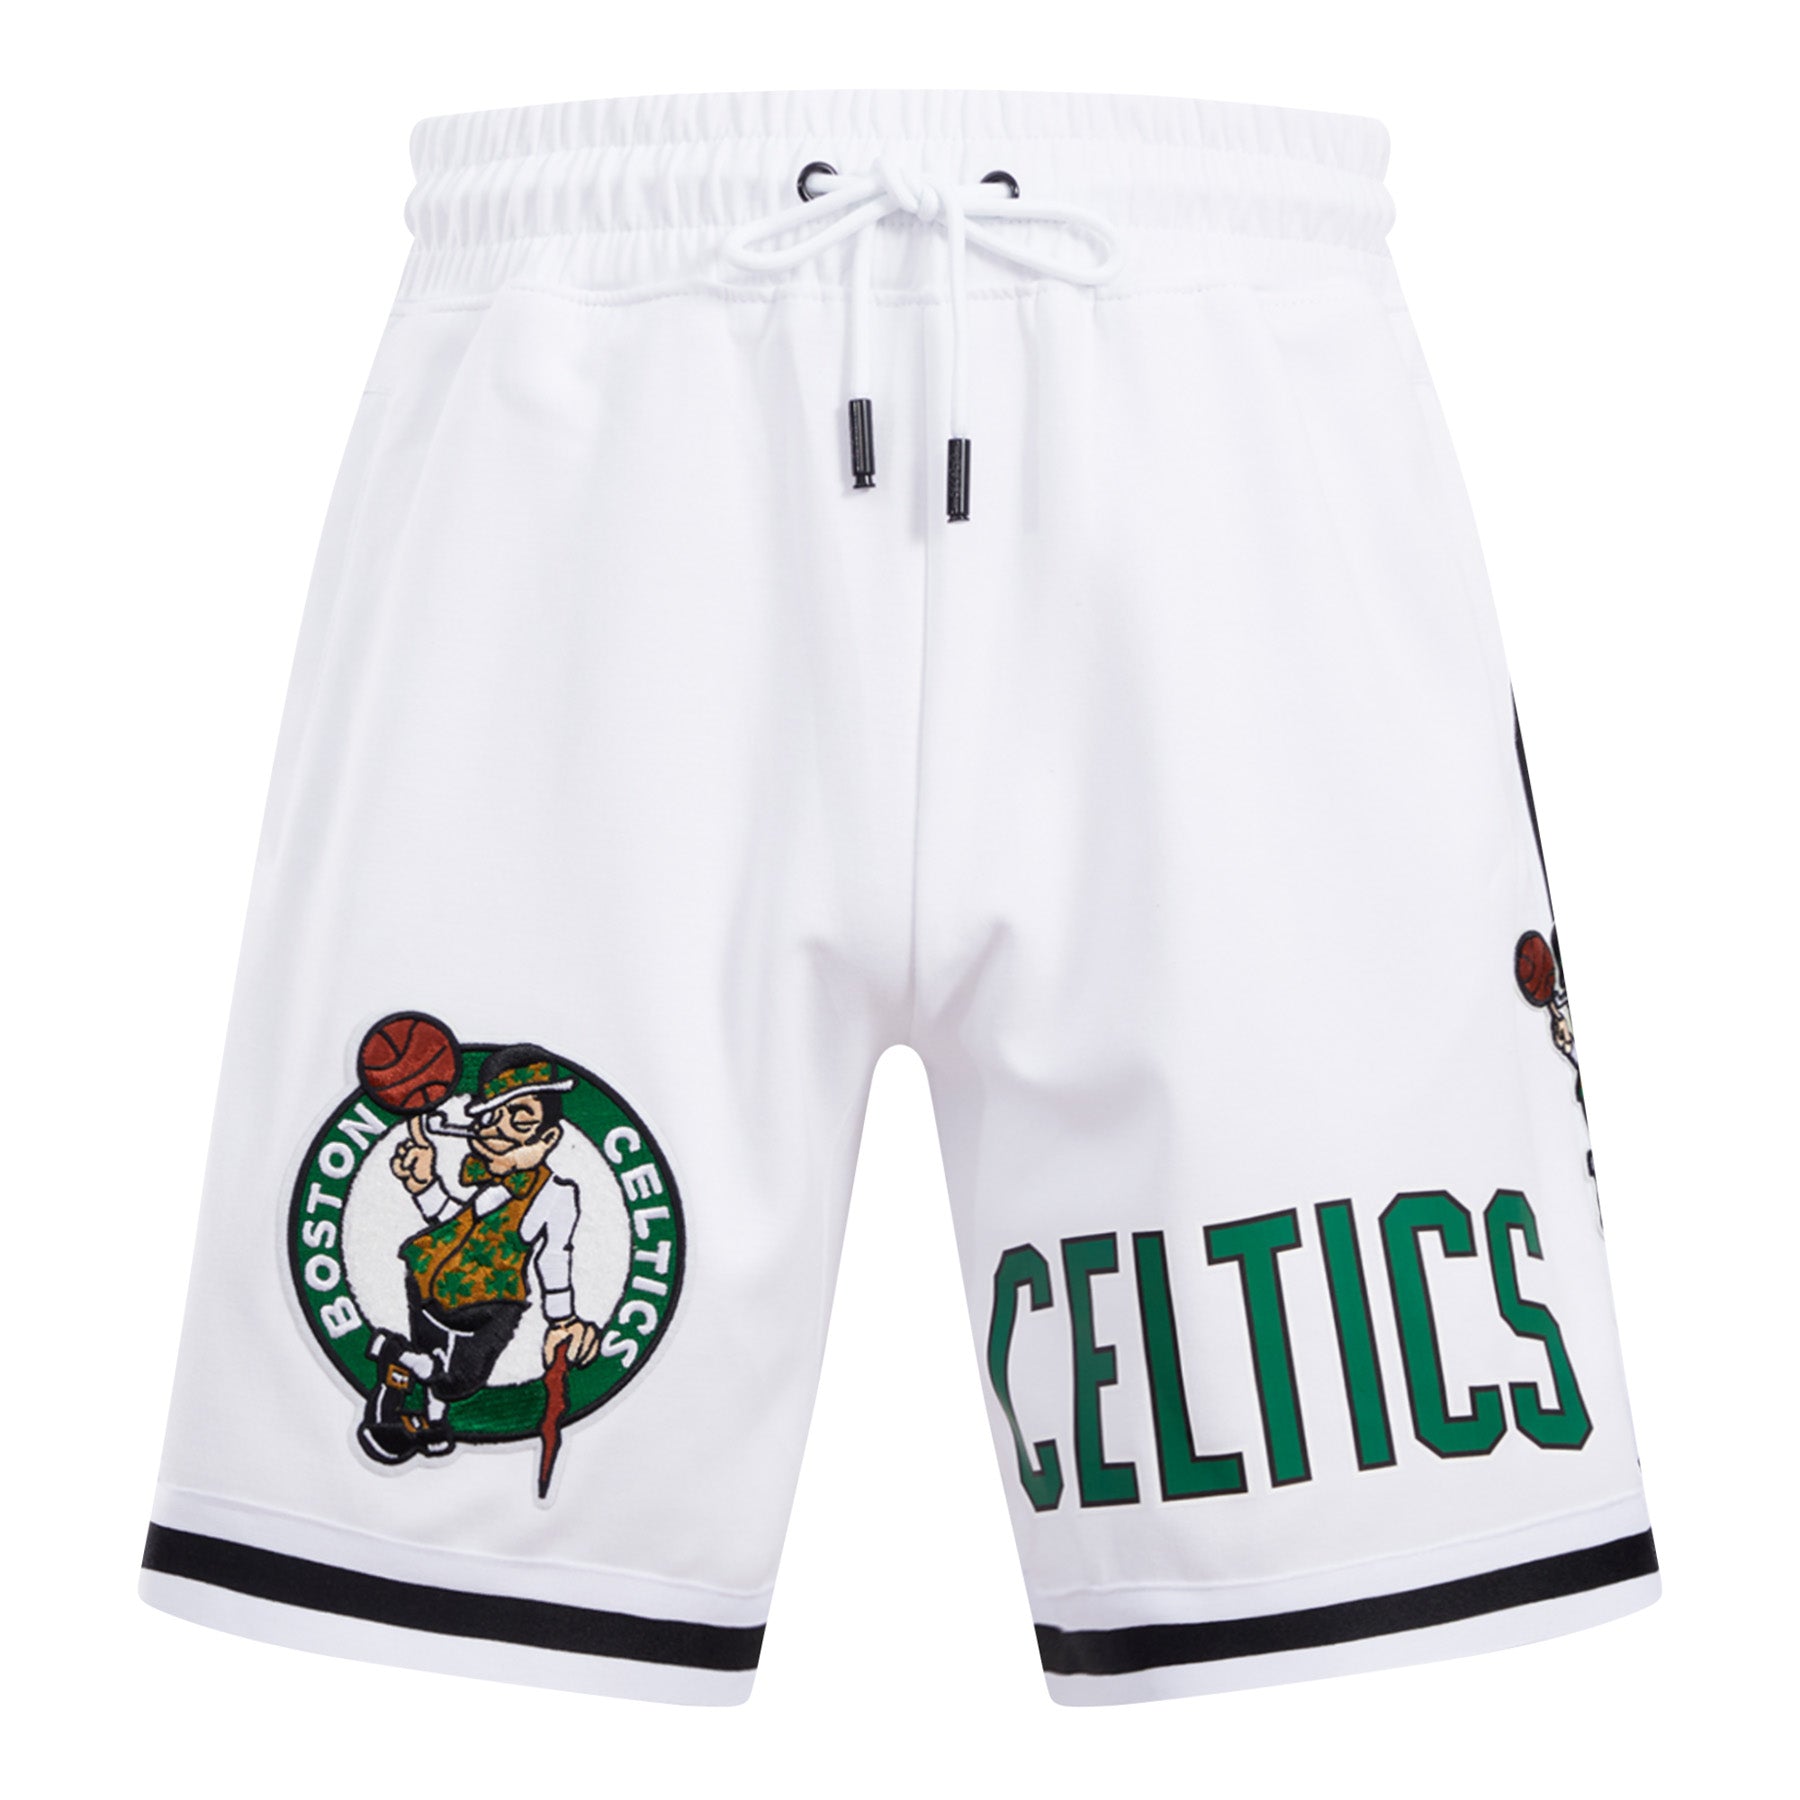 Pro Standard Celtics NBA Button Up Mesh Shorts